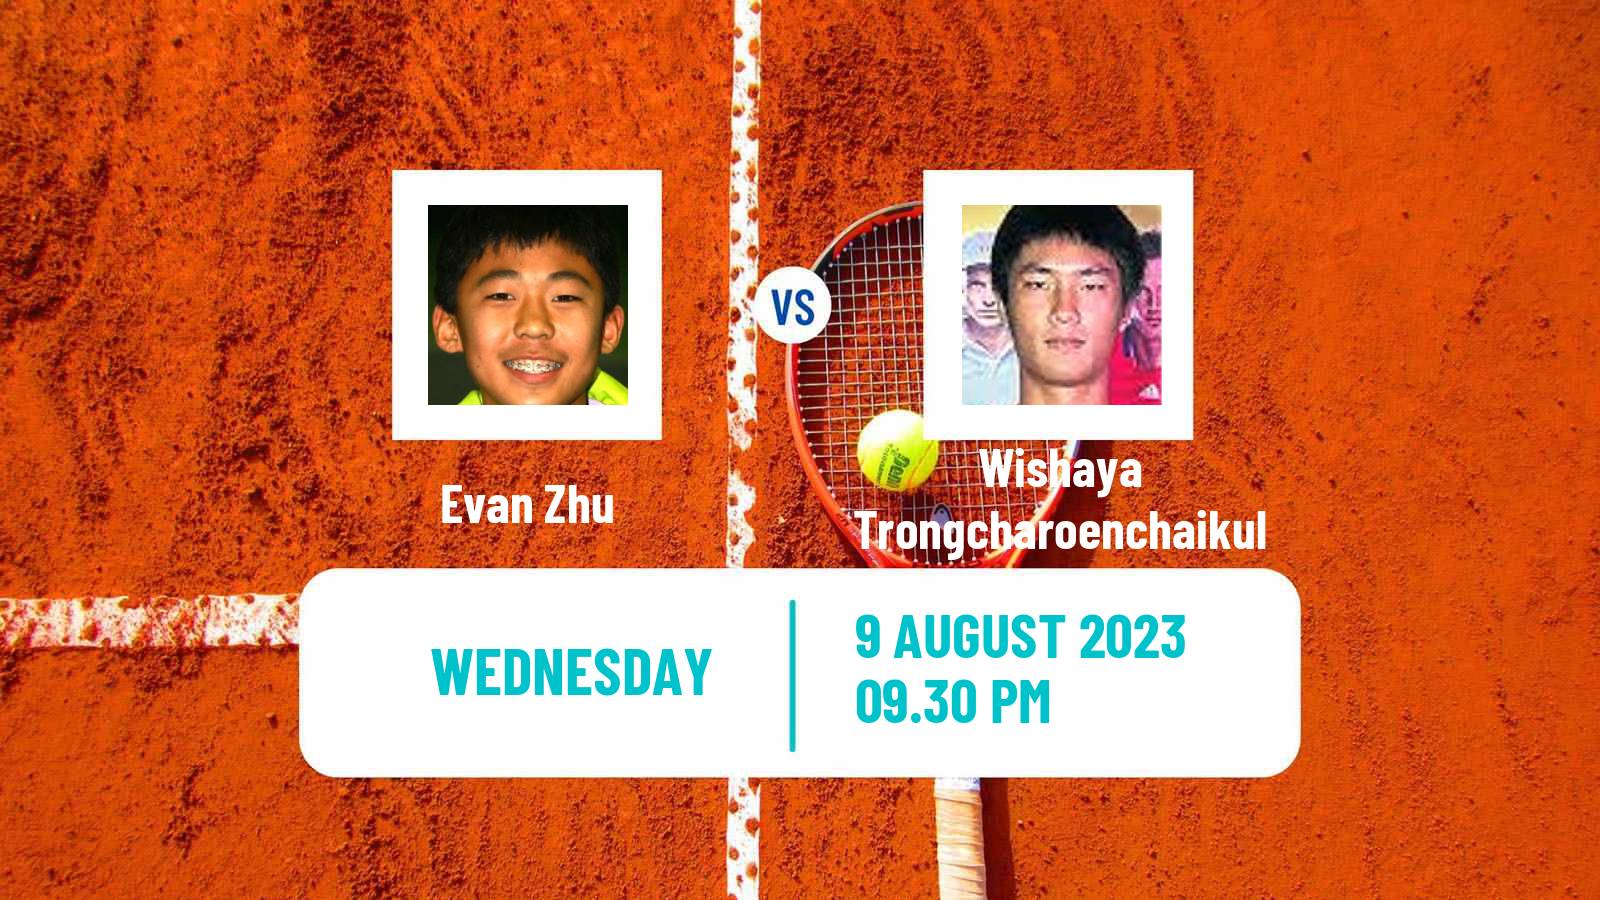 Tennis ITF M25 Baotou Men Evan Zhu - Wishaya Trongcharoenchaikul